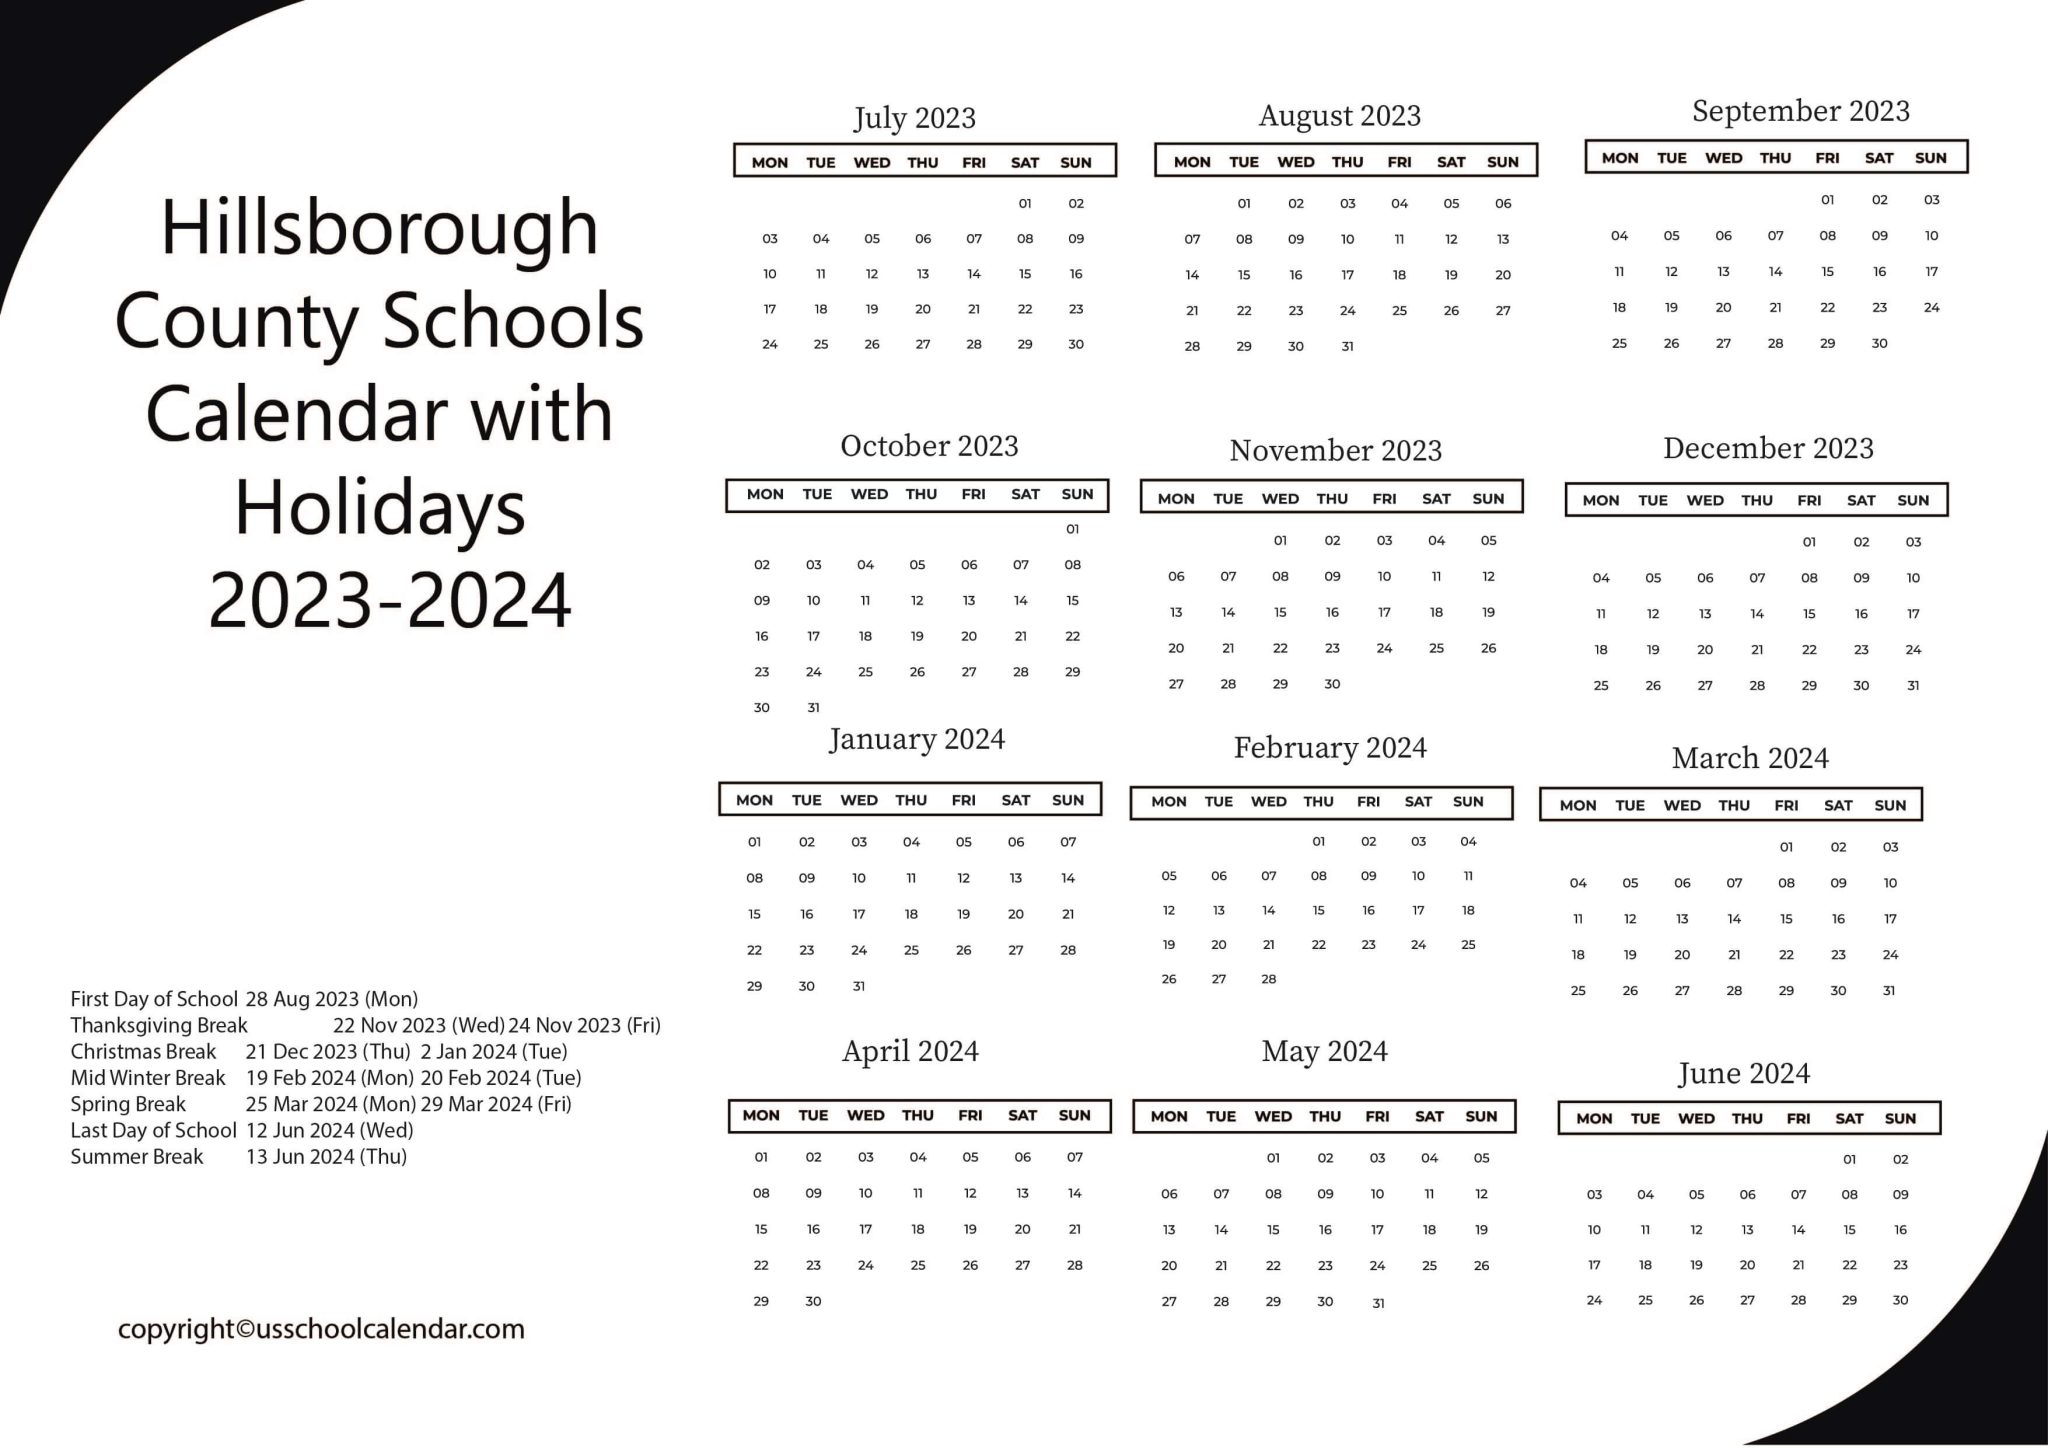 [WCPSS] Wake County School Calendar with Holidays 2023-2024